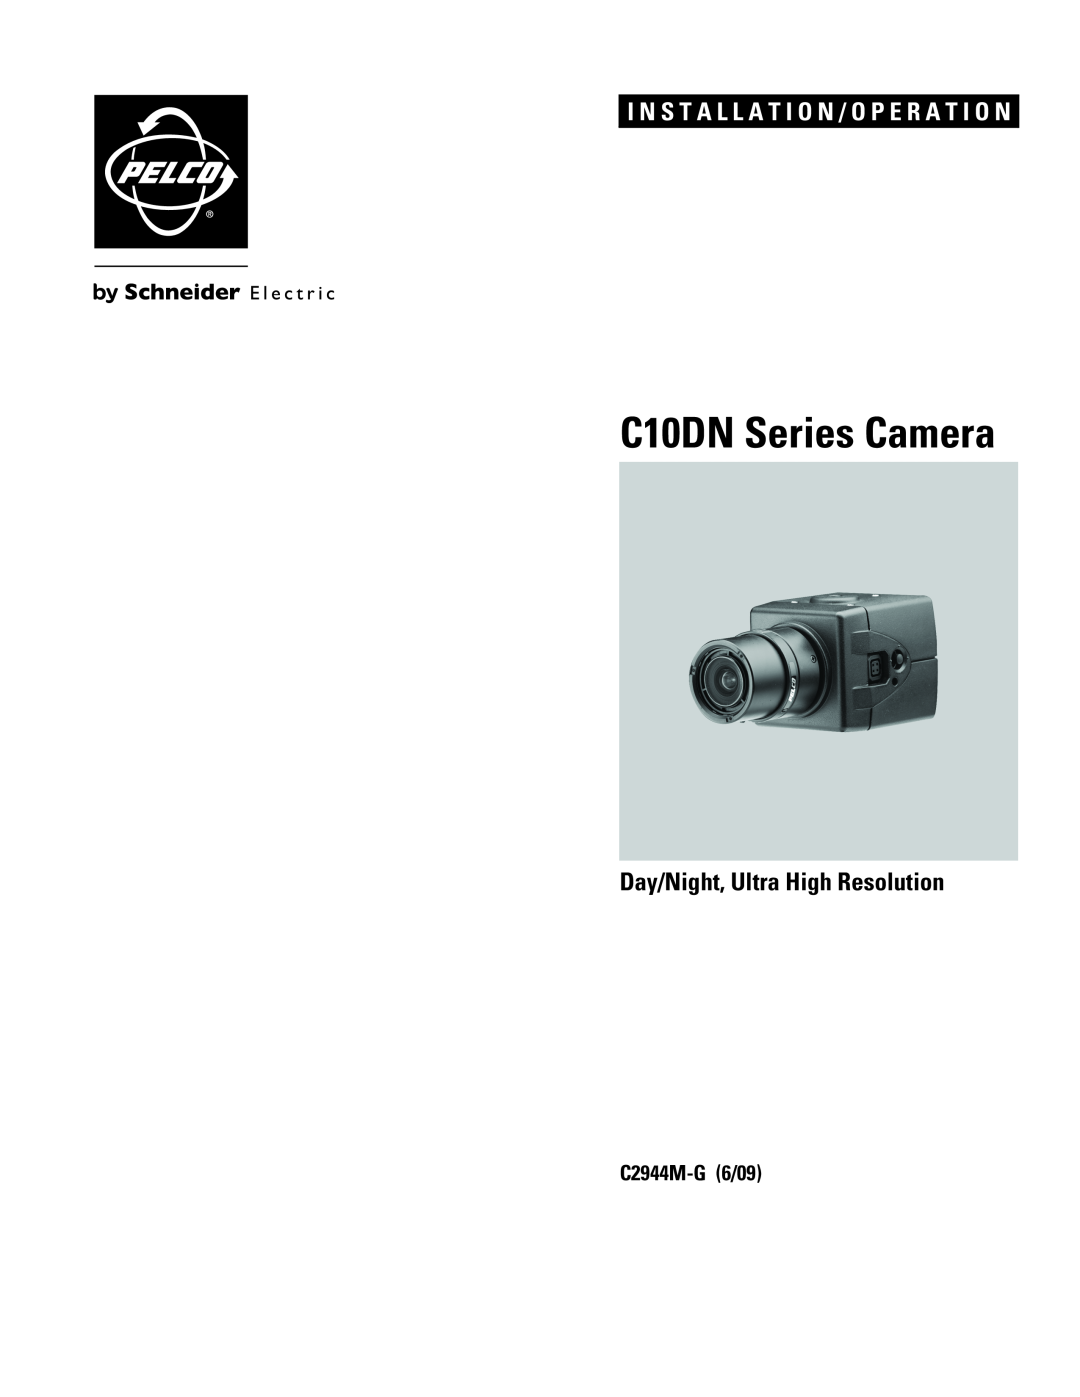 Pelco manual Day/Night, Ultra High Resolution, C2944M-G6/09, C10DN Series Camera 